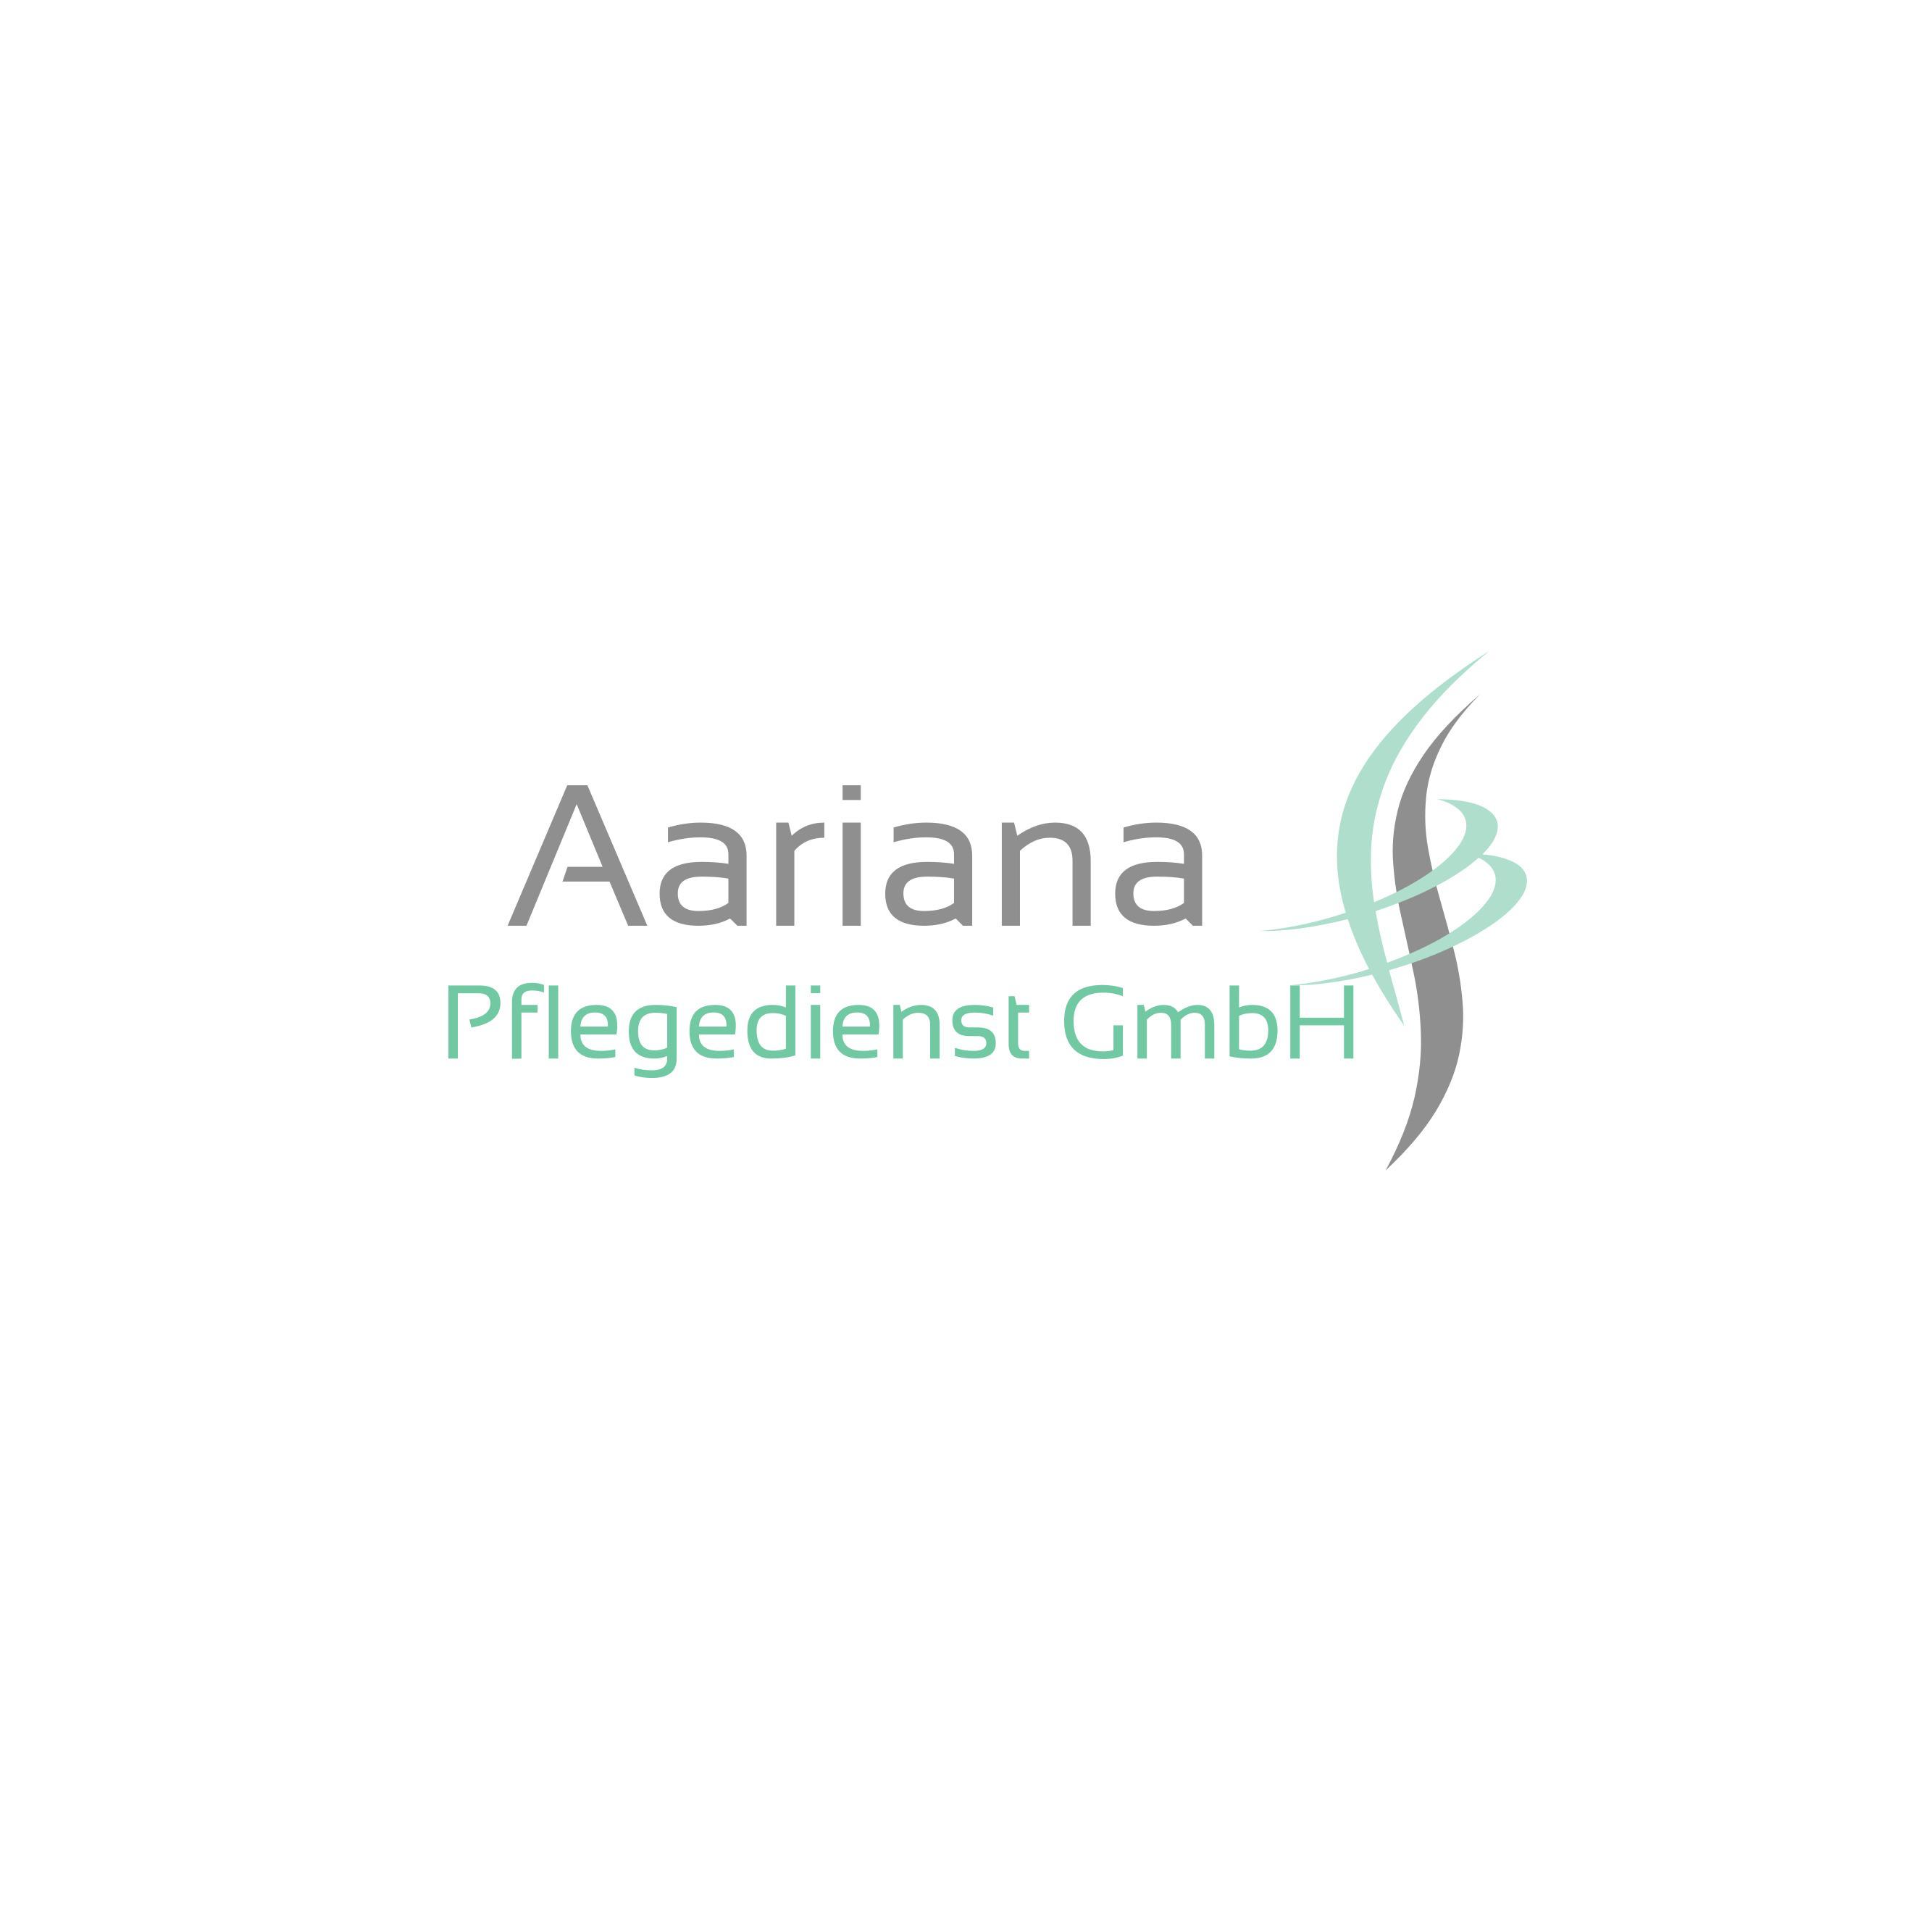 Aariana Pflegedienst GmbH  